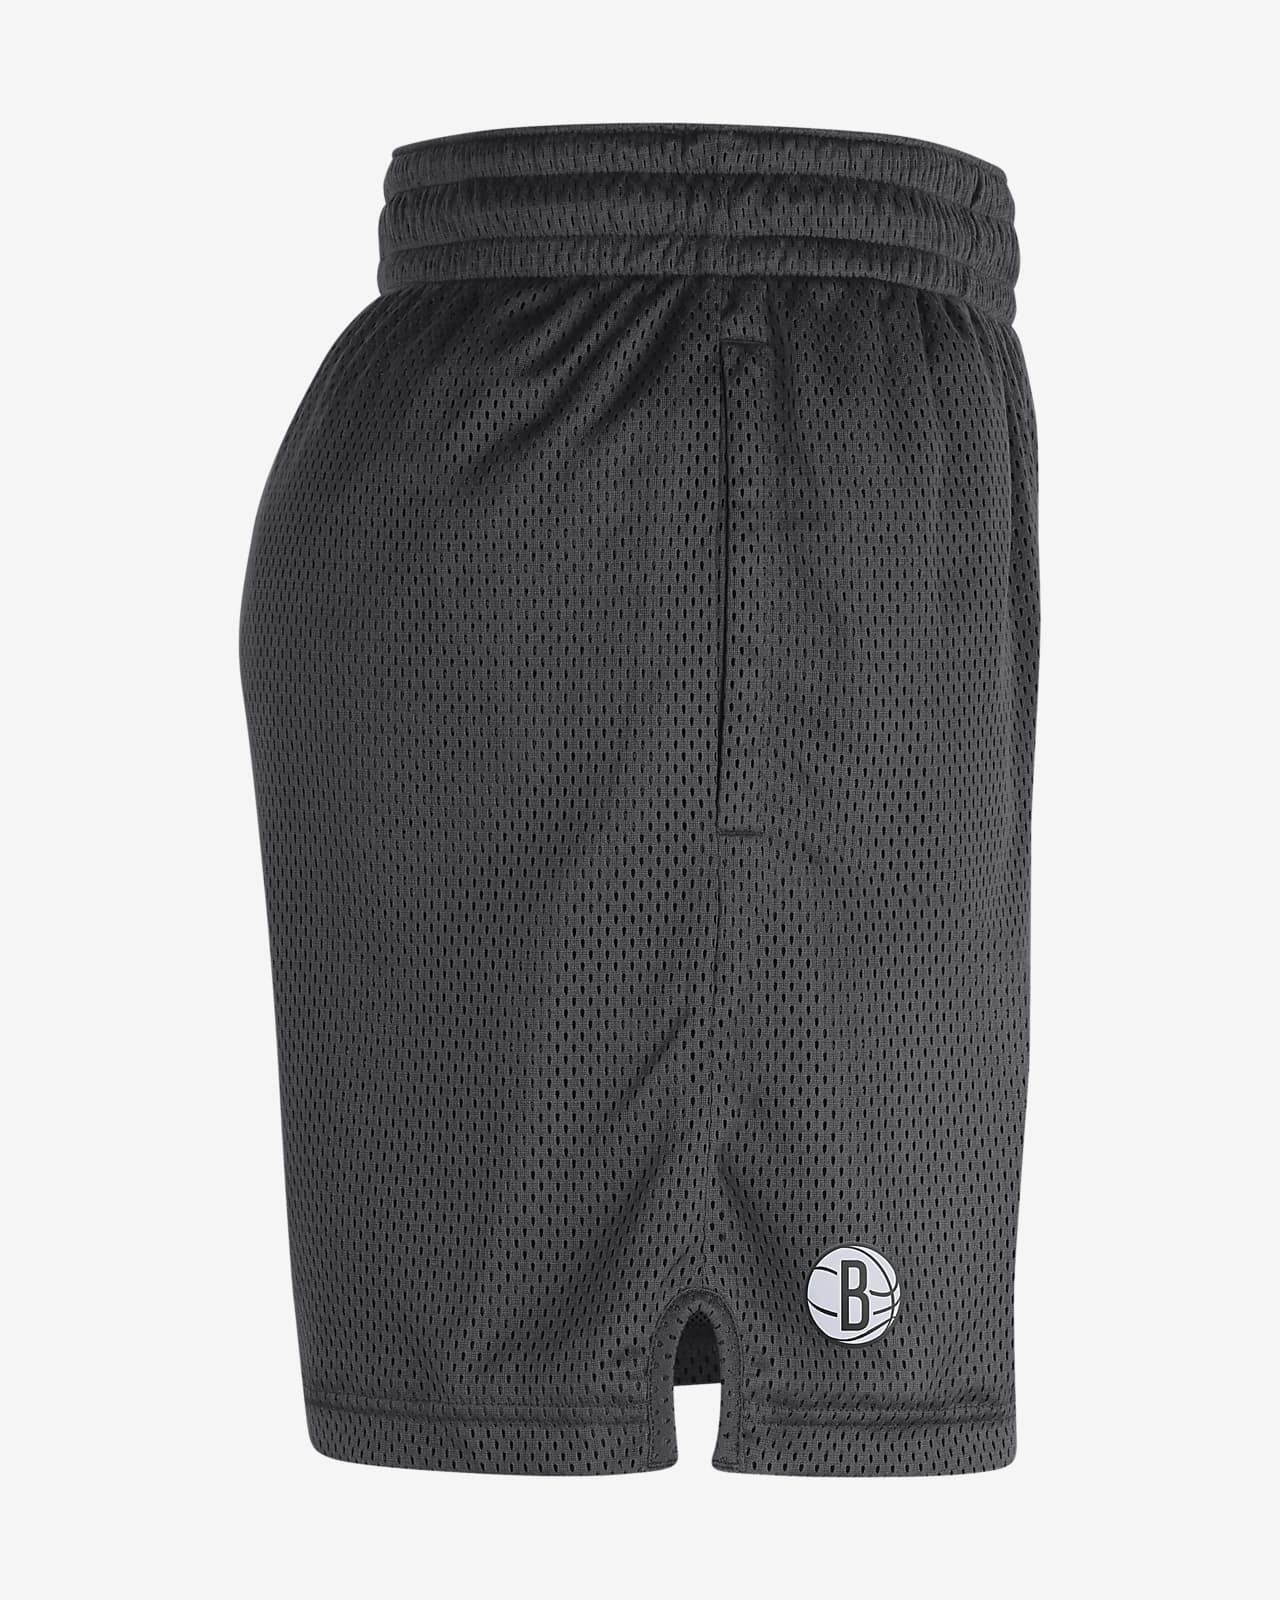 brooklyn nets shorts black